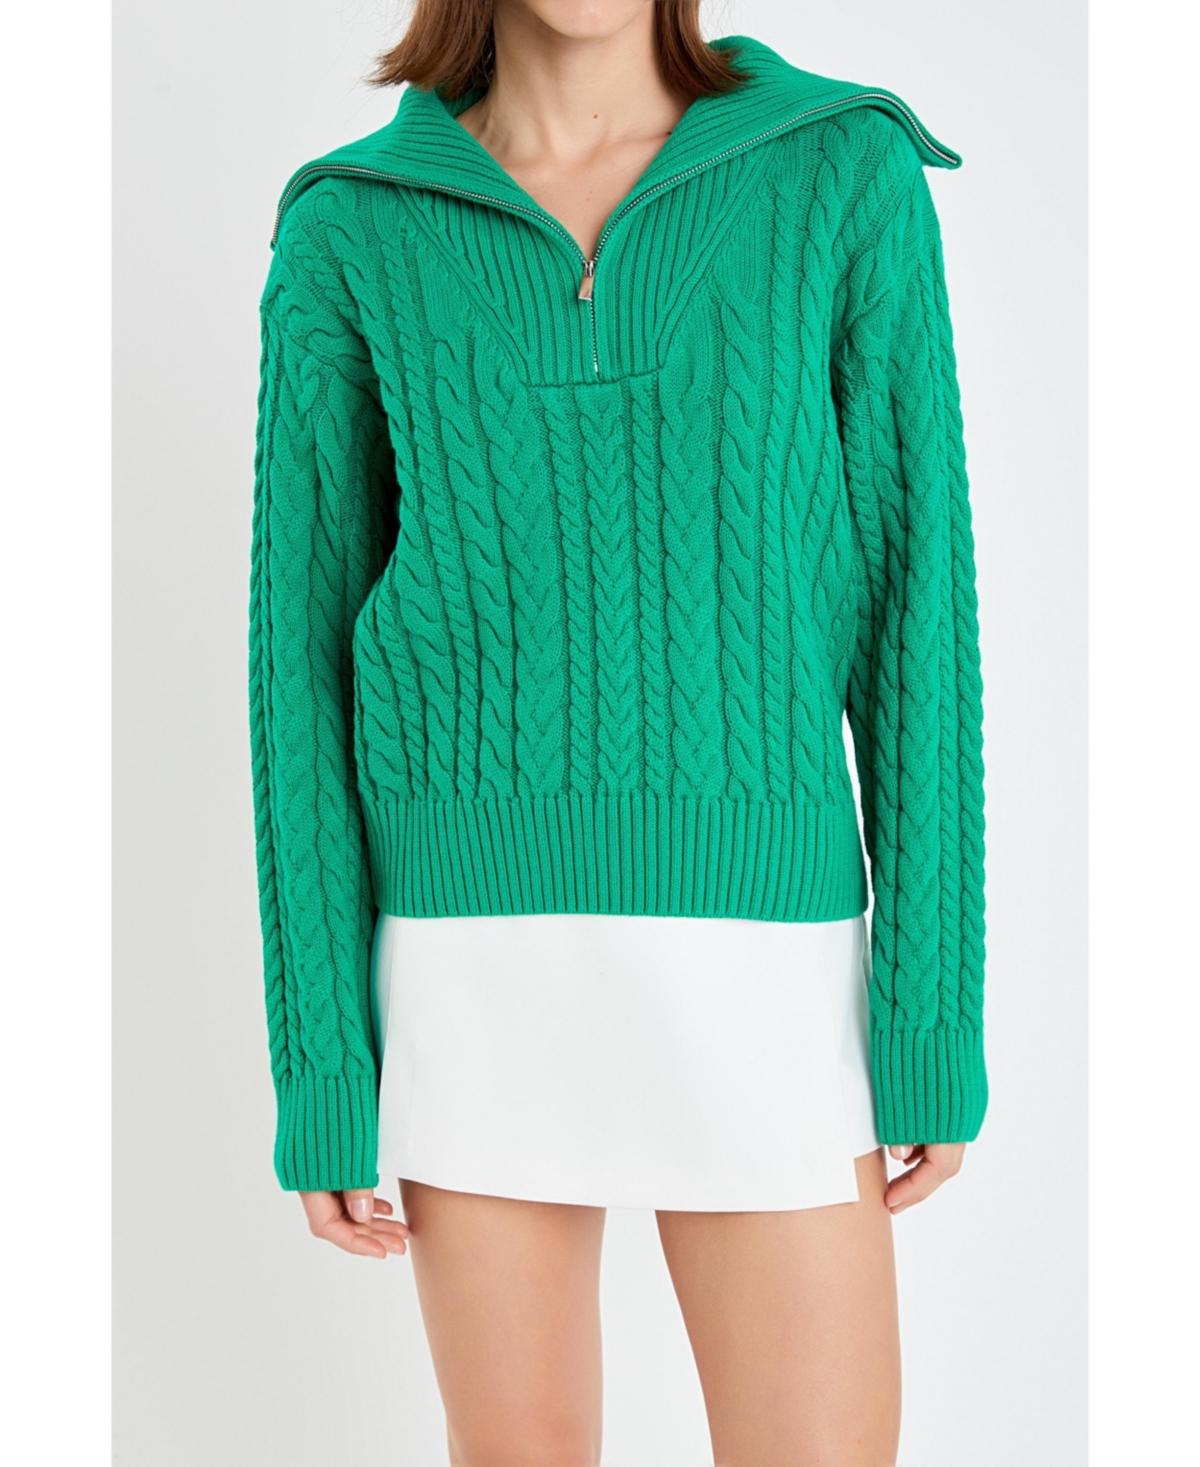 Women's Zip Up Knit Top - Green